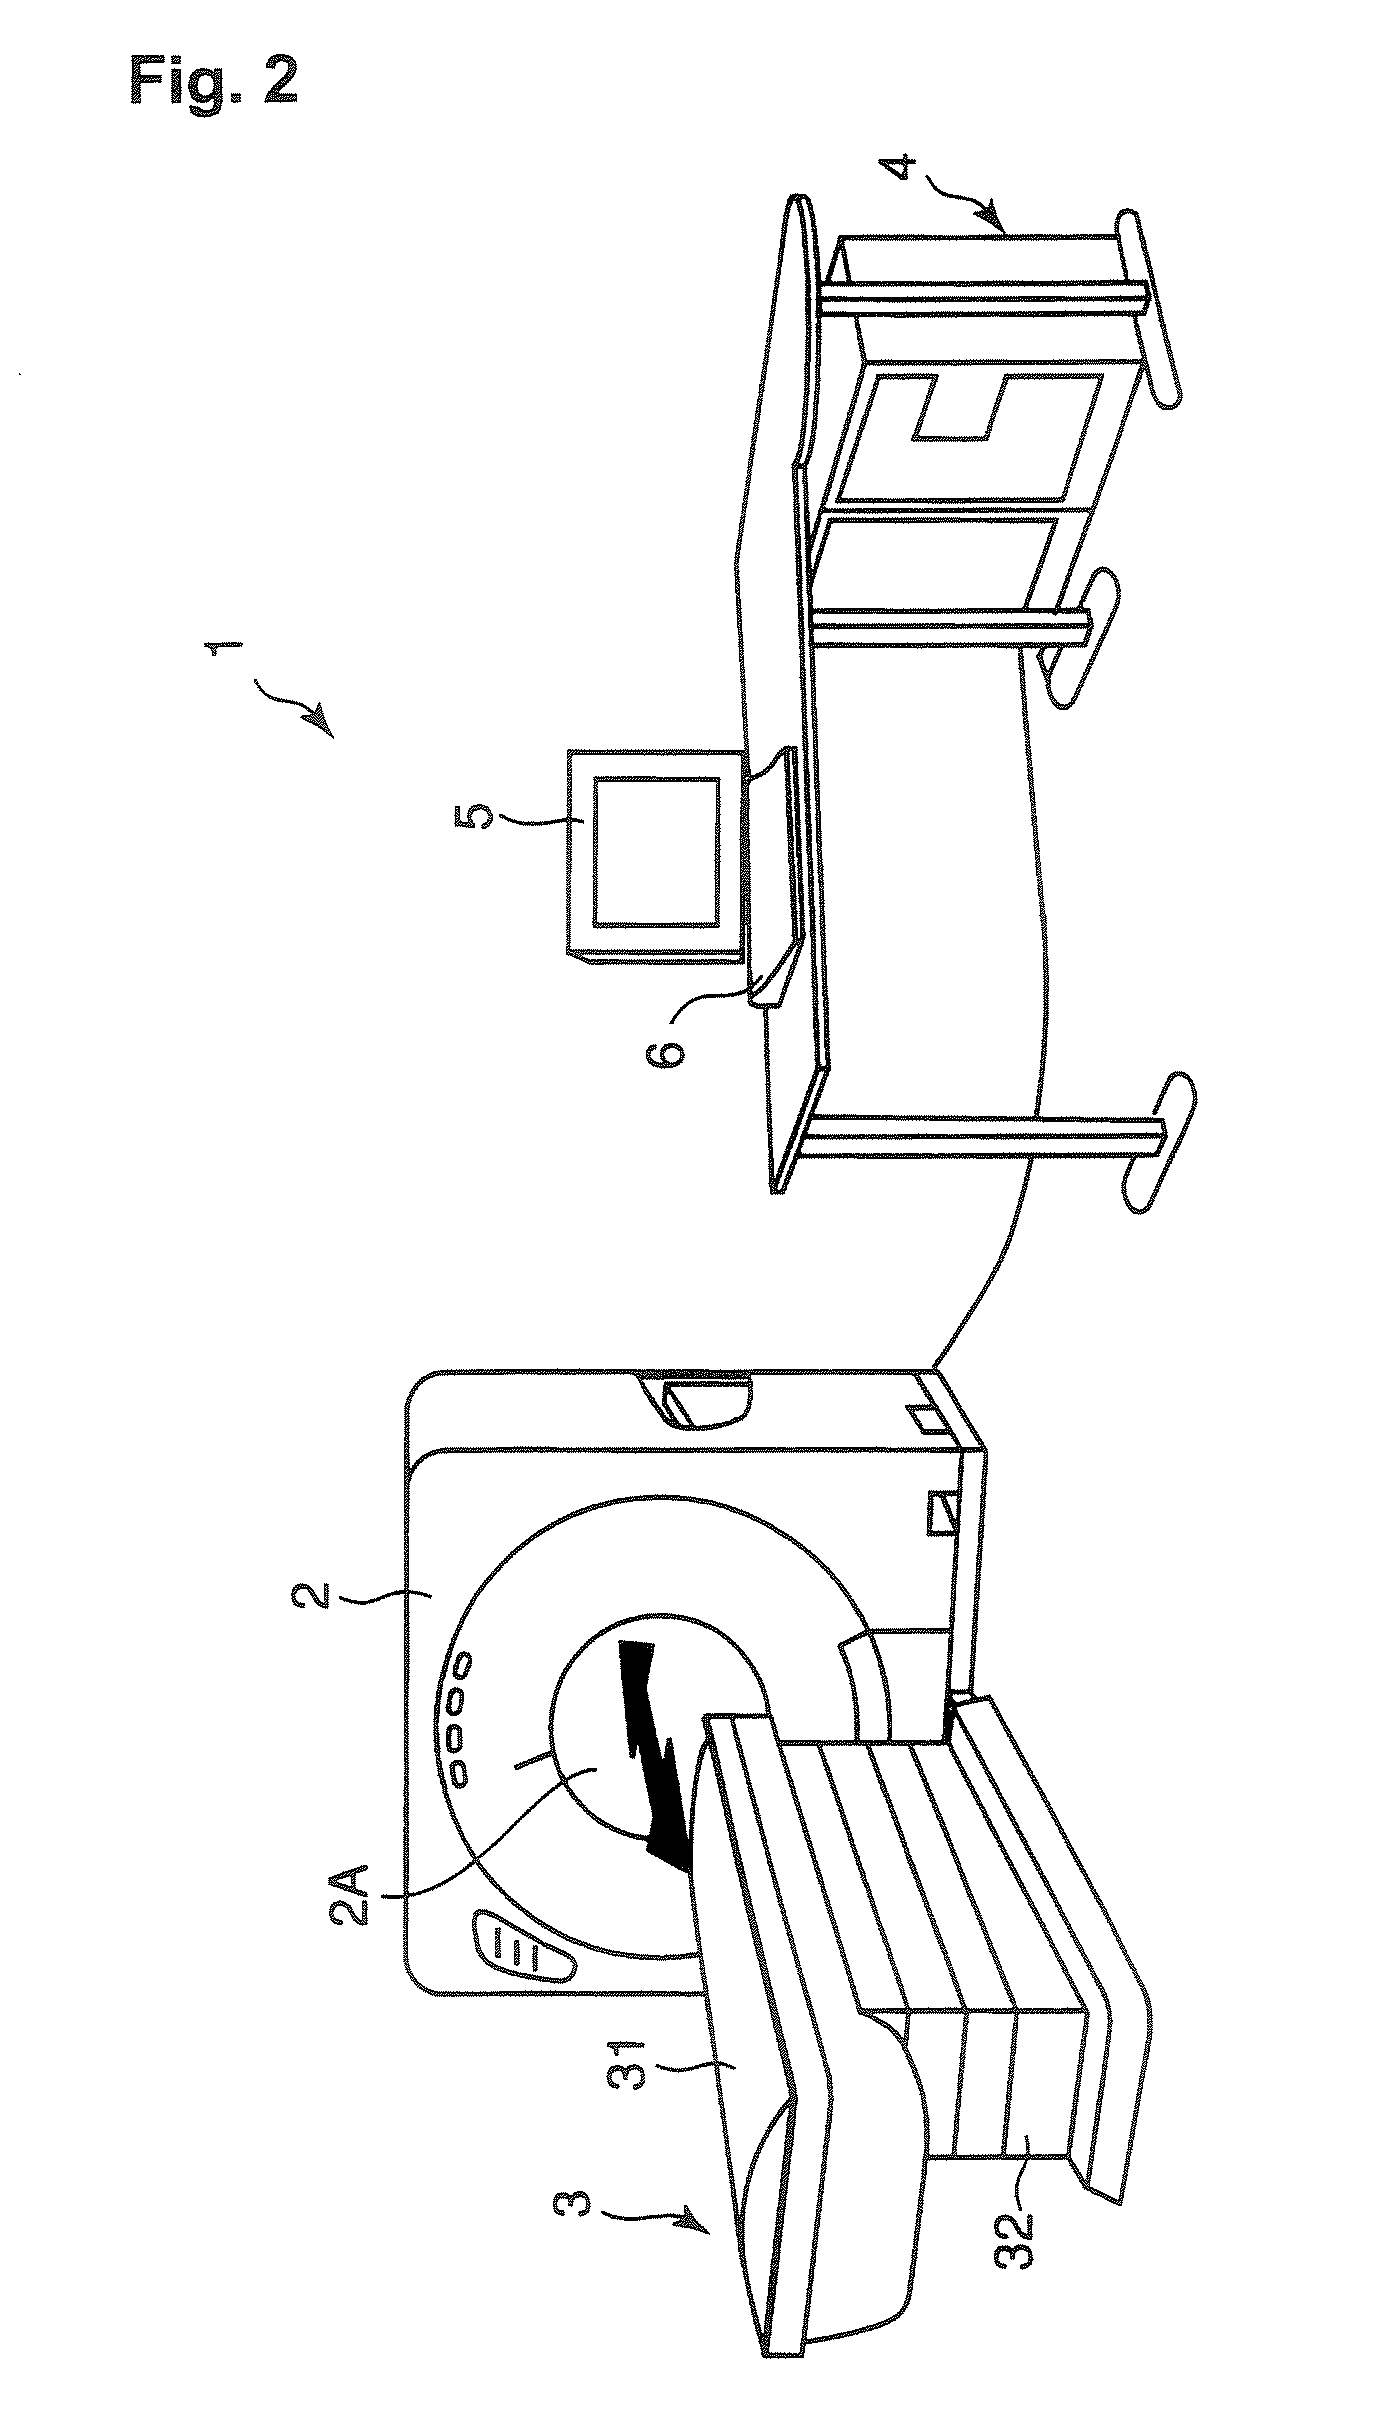 X-ray CT apparatus, method of aligning phantom, and phantom retaining tool